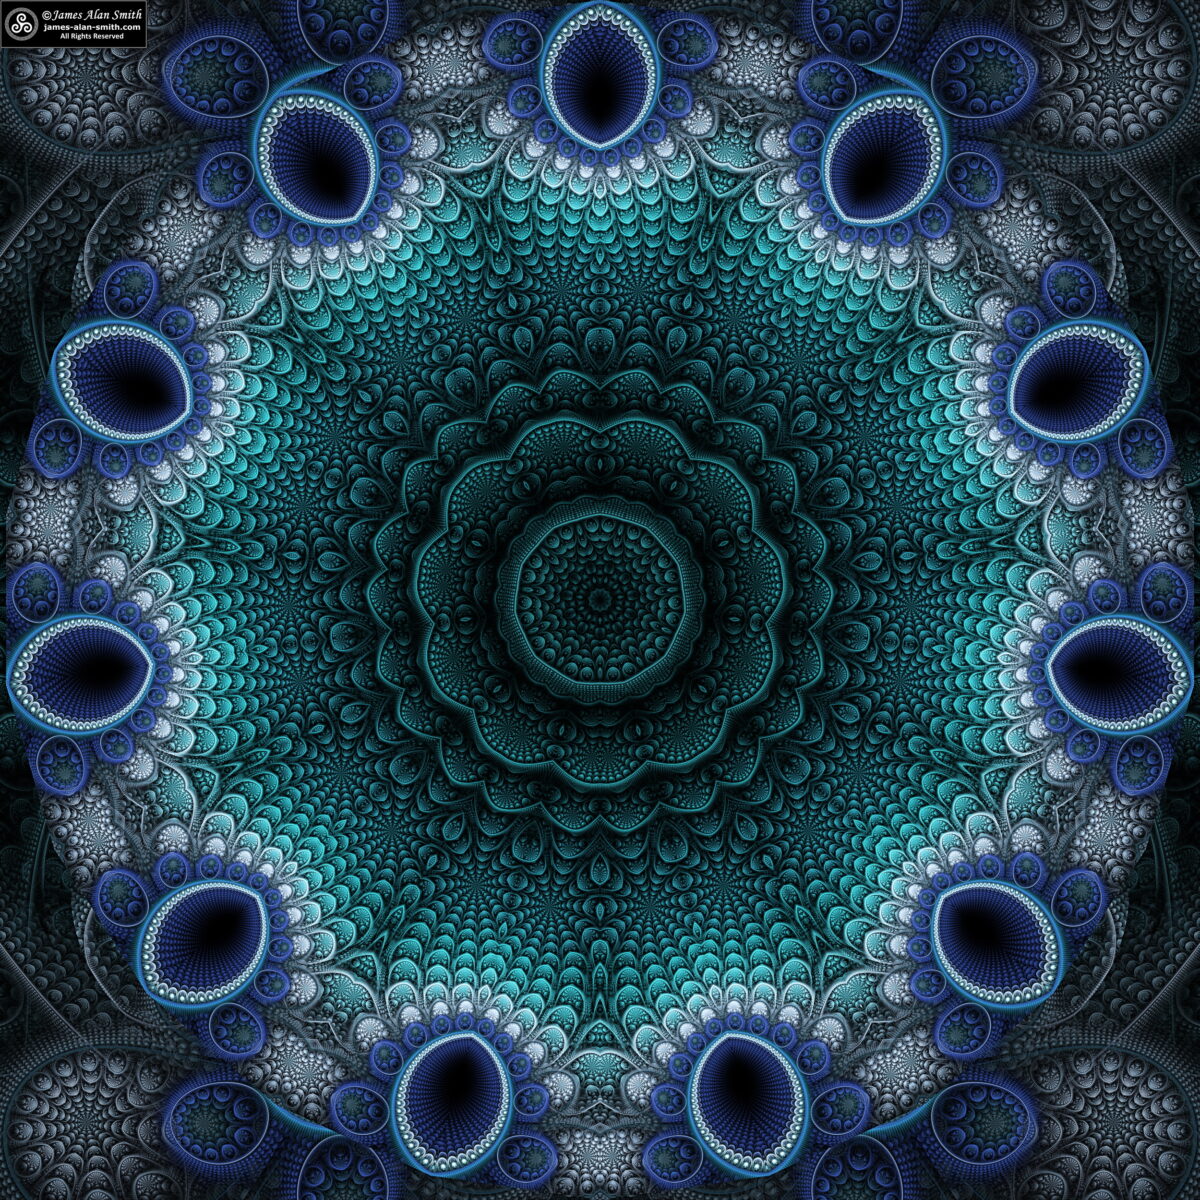 Infinity Mirror Mandala: Artwork by James Alan Smith